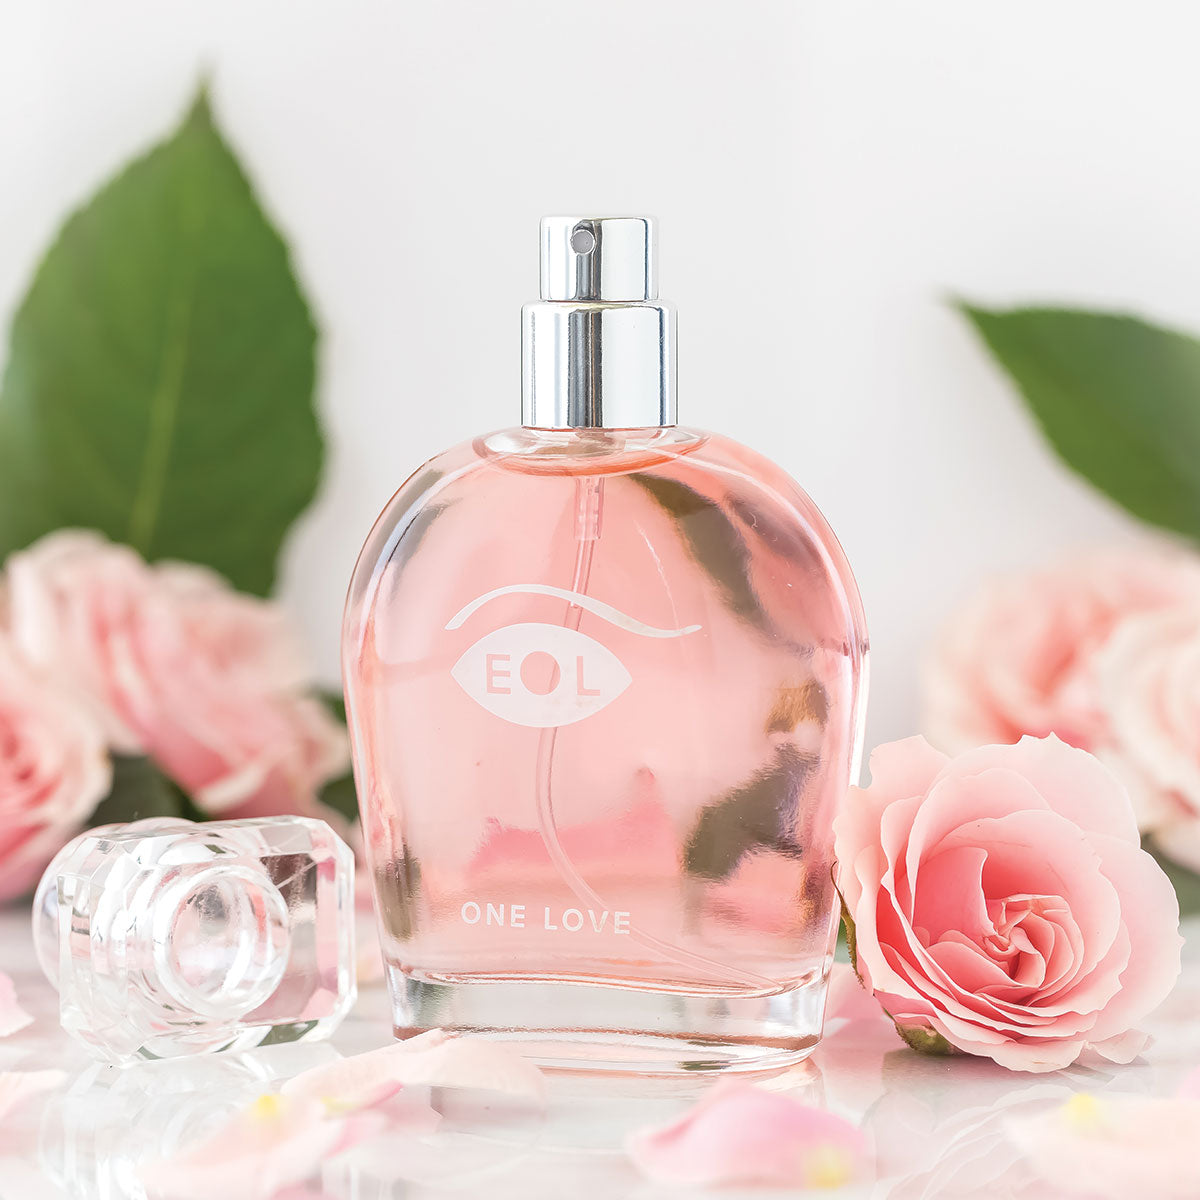 Eye of Love Pheromone Parfum 50ml - One Love (F to M) Intimates Adult Boutique